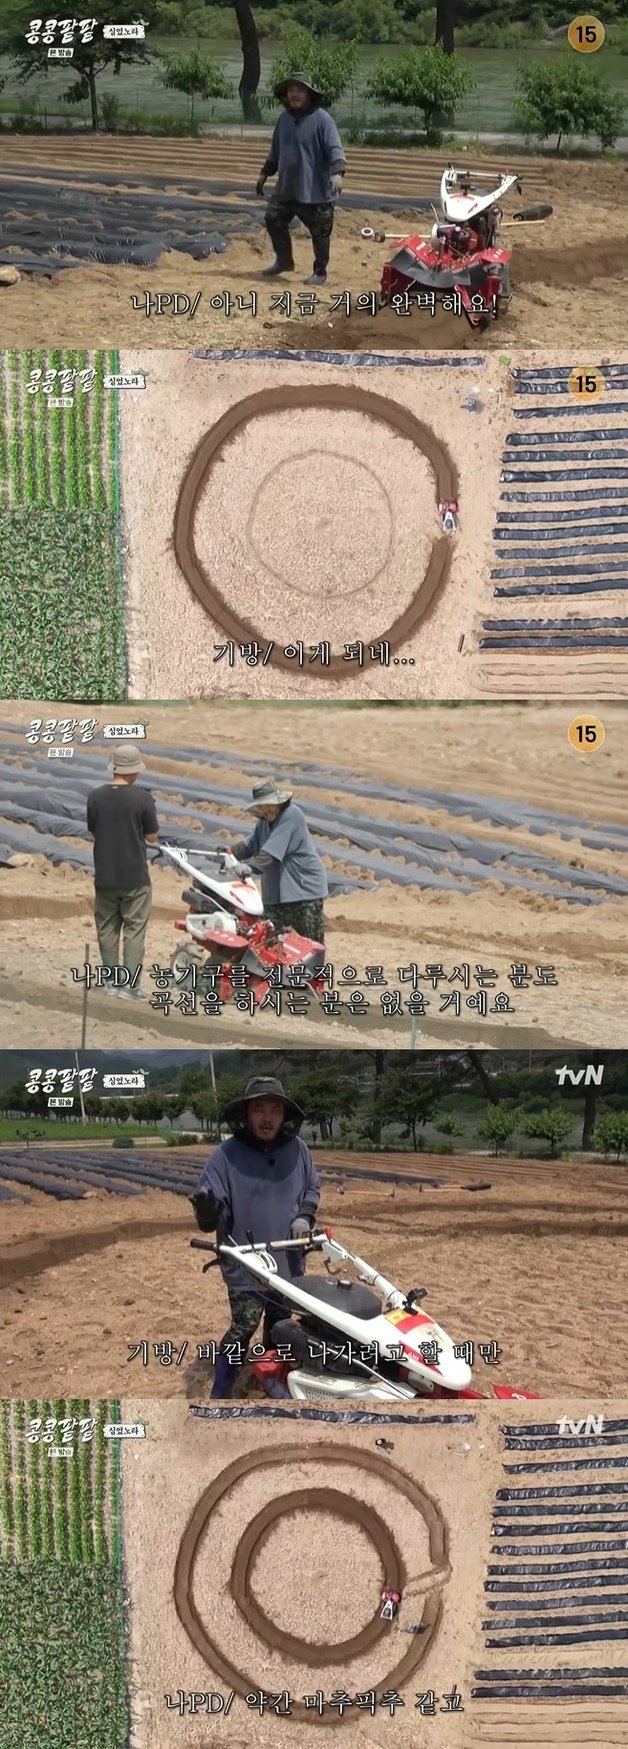 tvN ‘콩콩팥팥’ 캡처